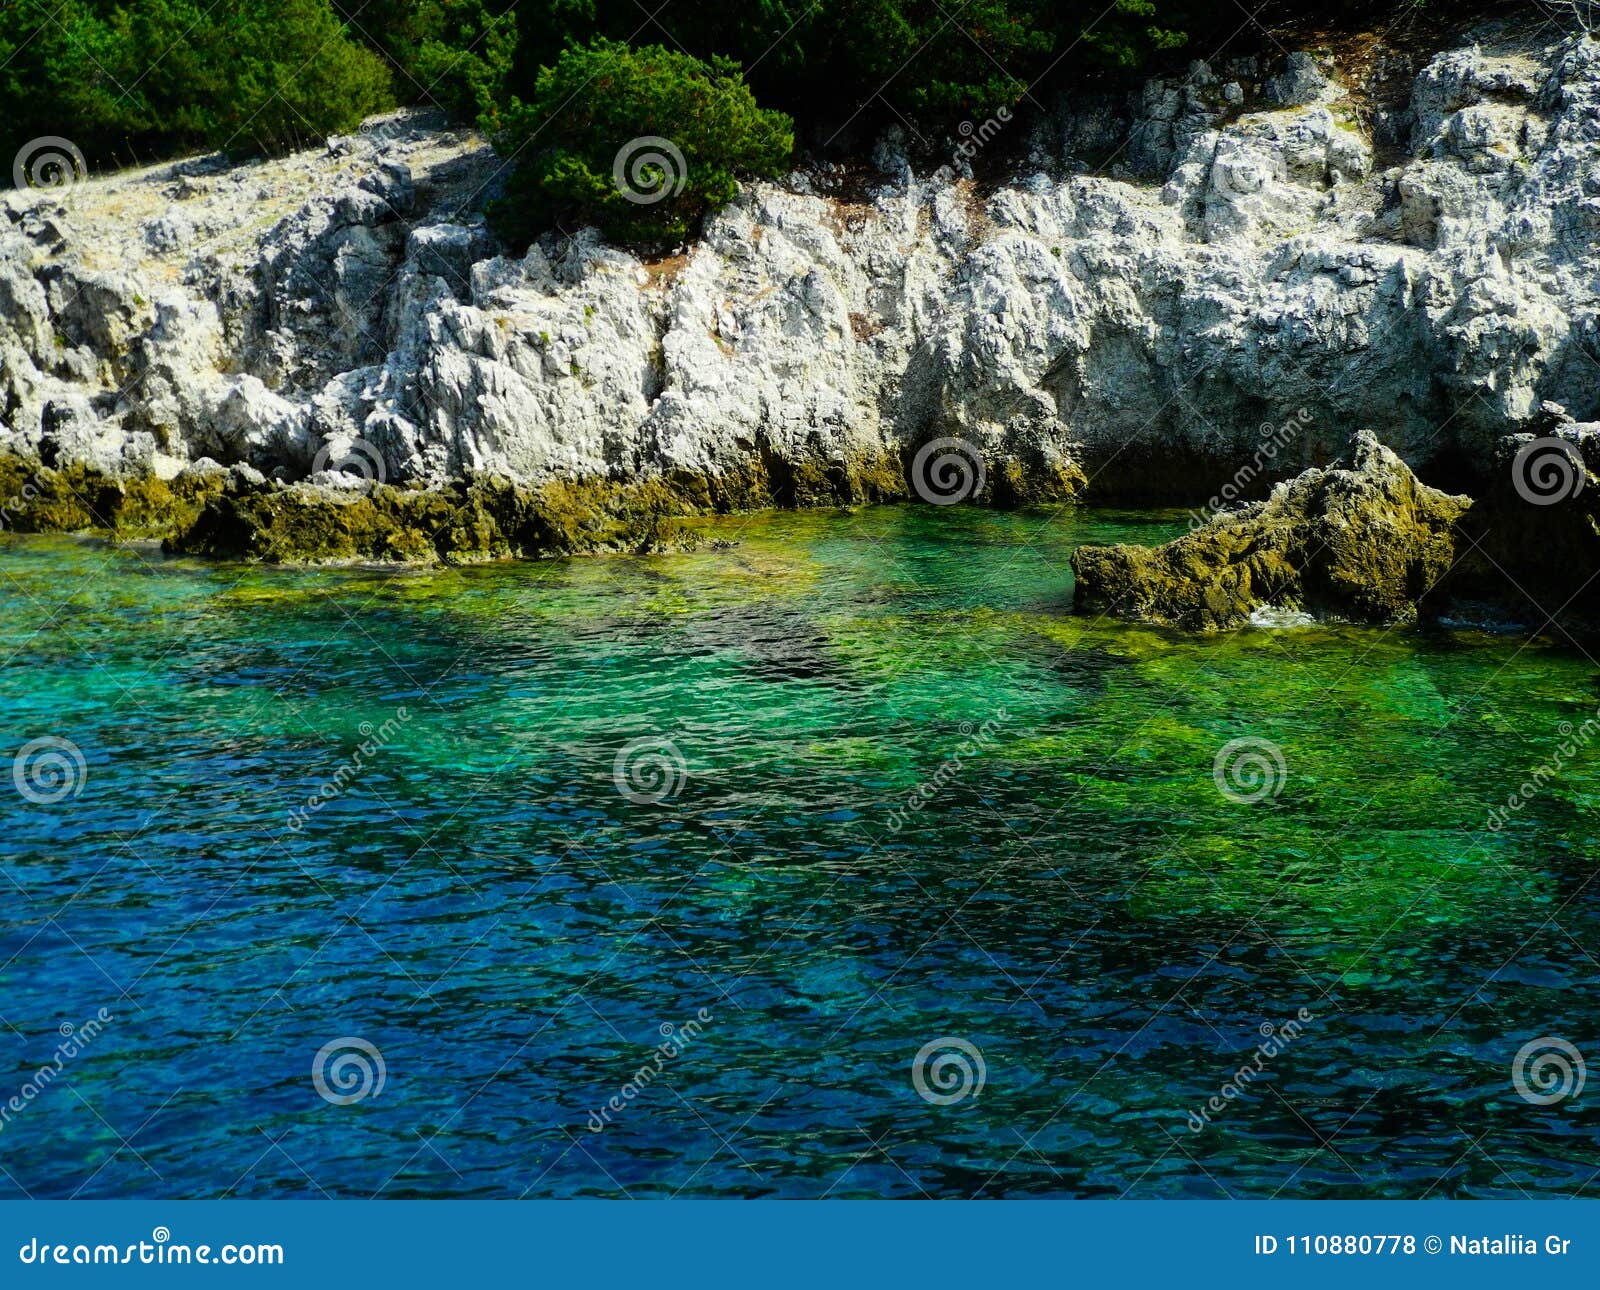 greece rocky coasline, green, blue, turqouise, aquamarine water, mediterranean sea.